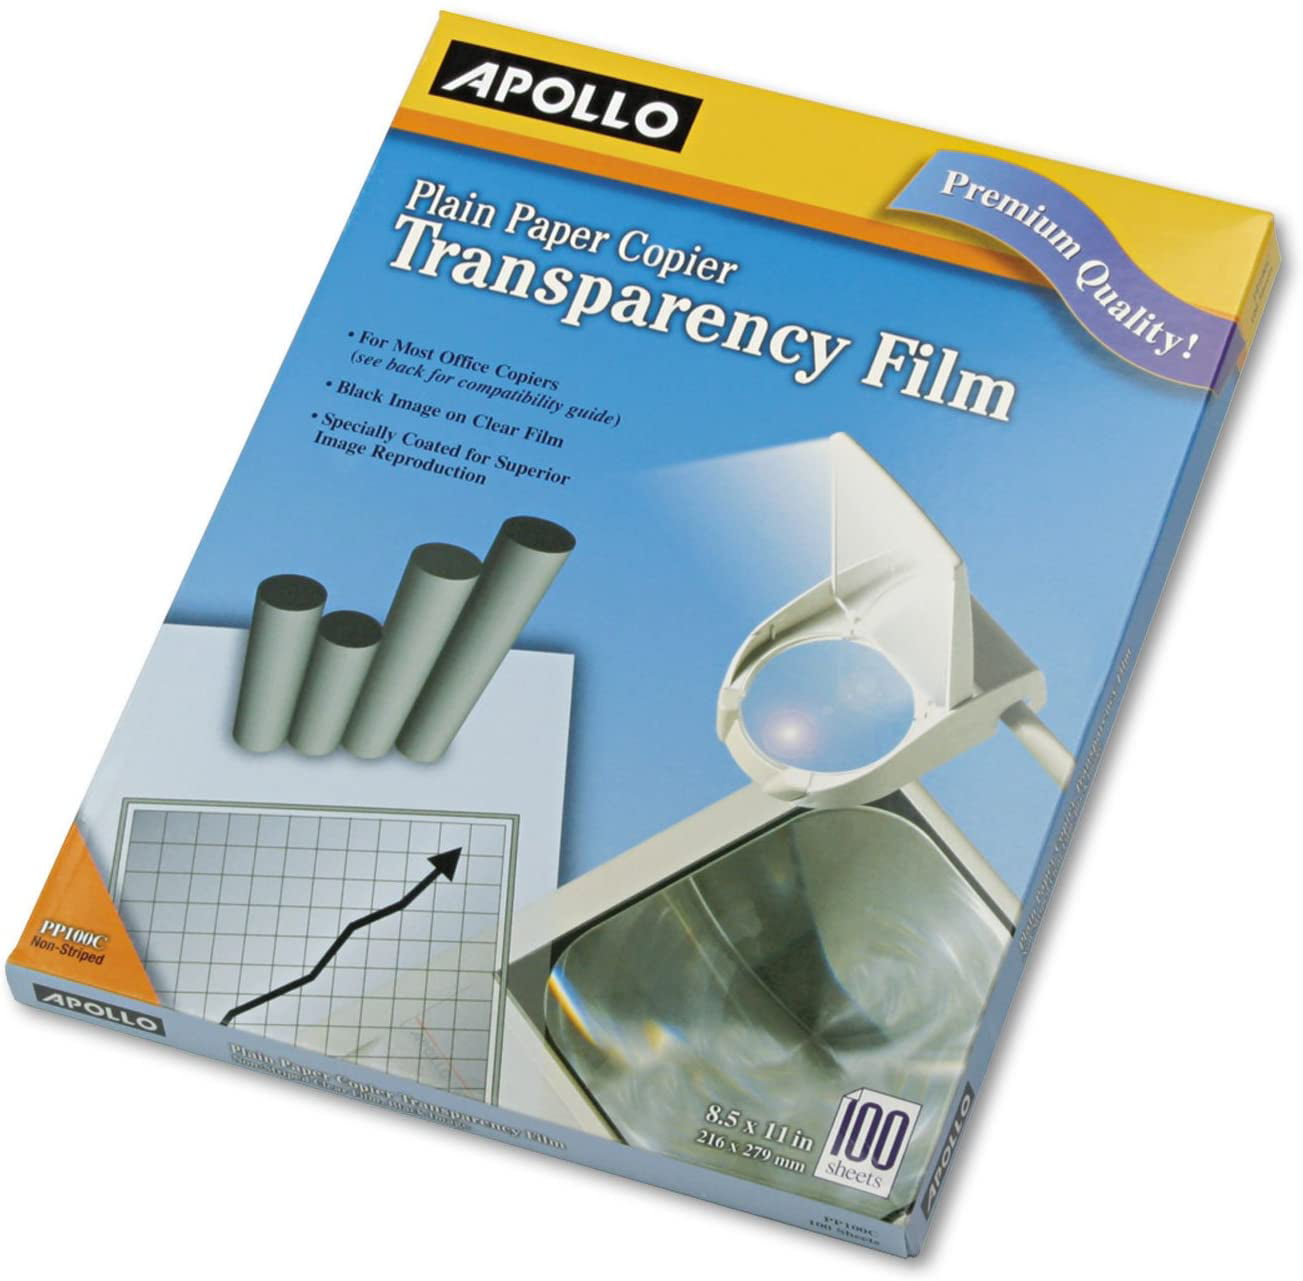 VPP201CE 8.5 x 11 Inches Clear Sheet and Black Image 100 Sheets per Box Apollo Plain Paper Copier Film with Sensing Stripe 